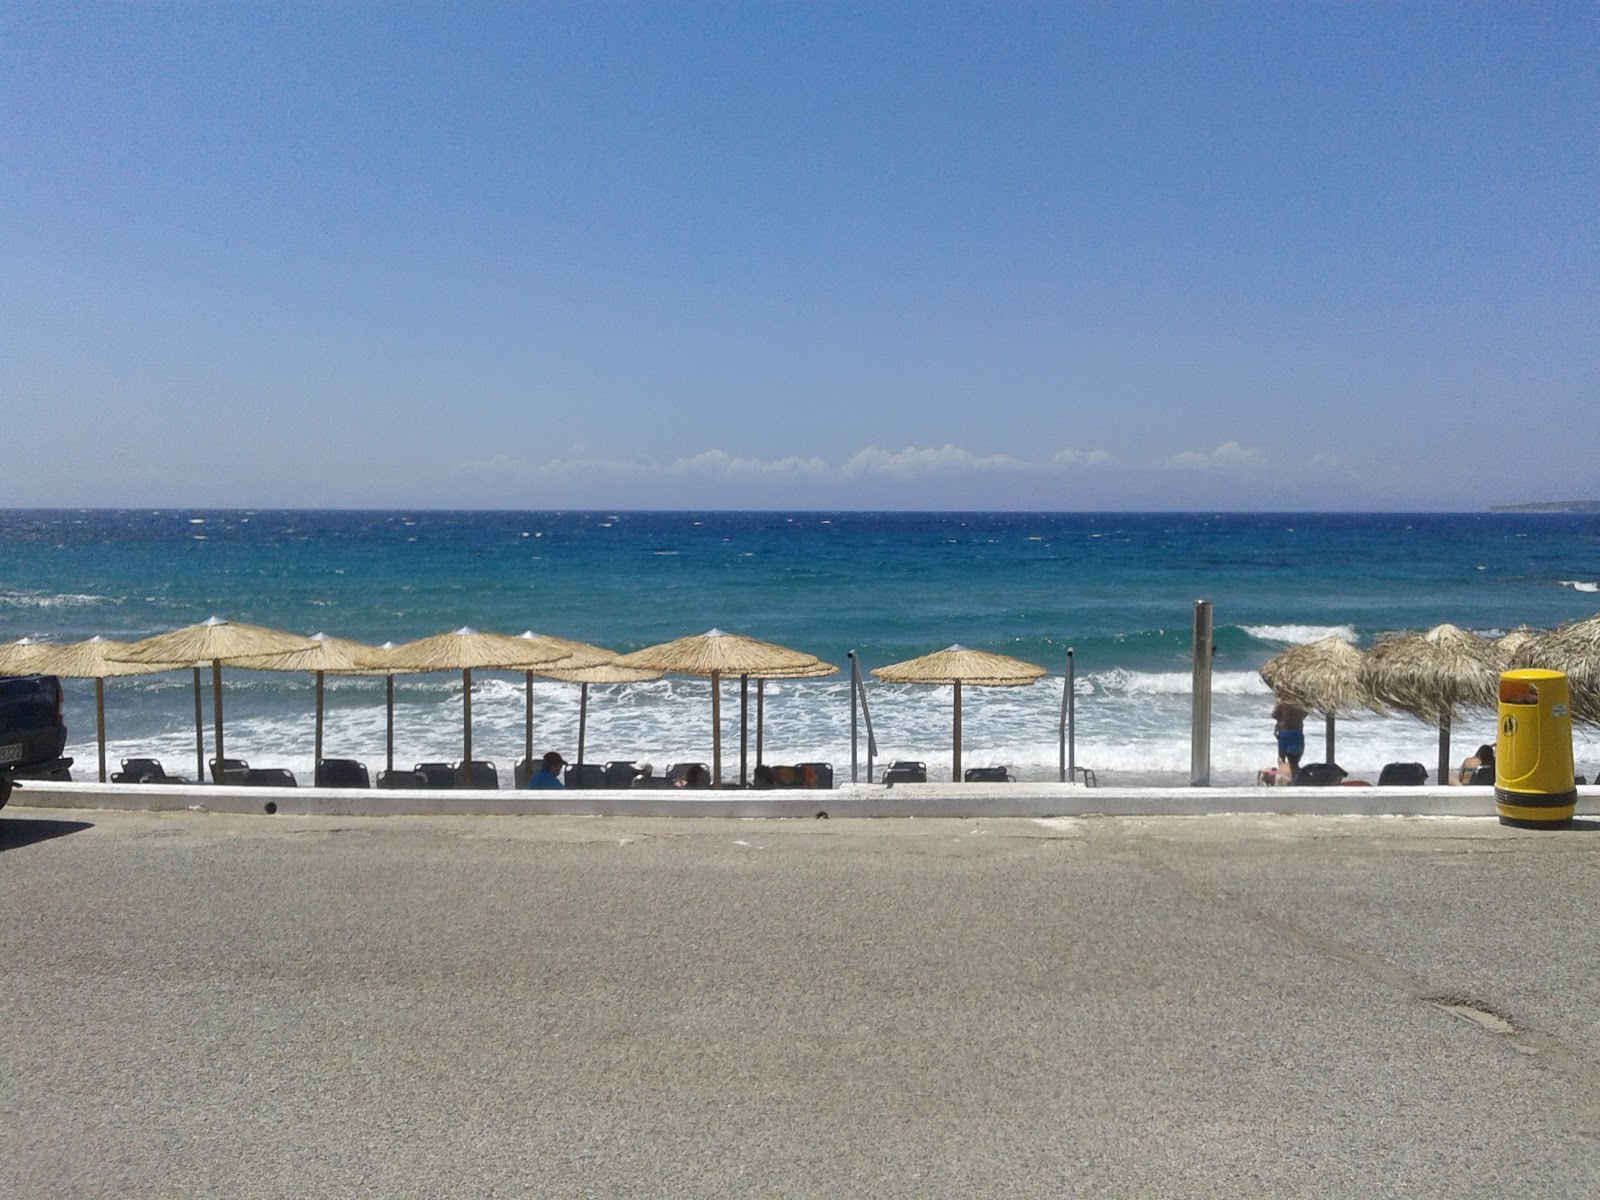 Fotografie cu Pyla beach cu nivelul de curățenie in medie